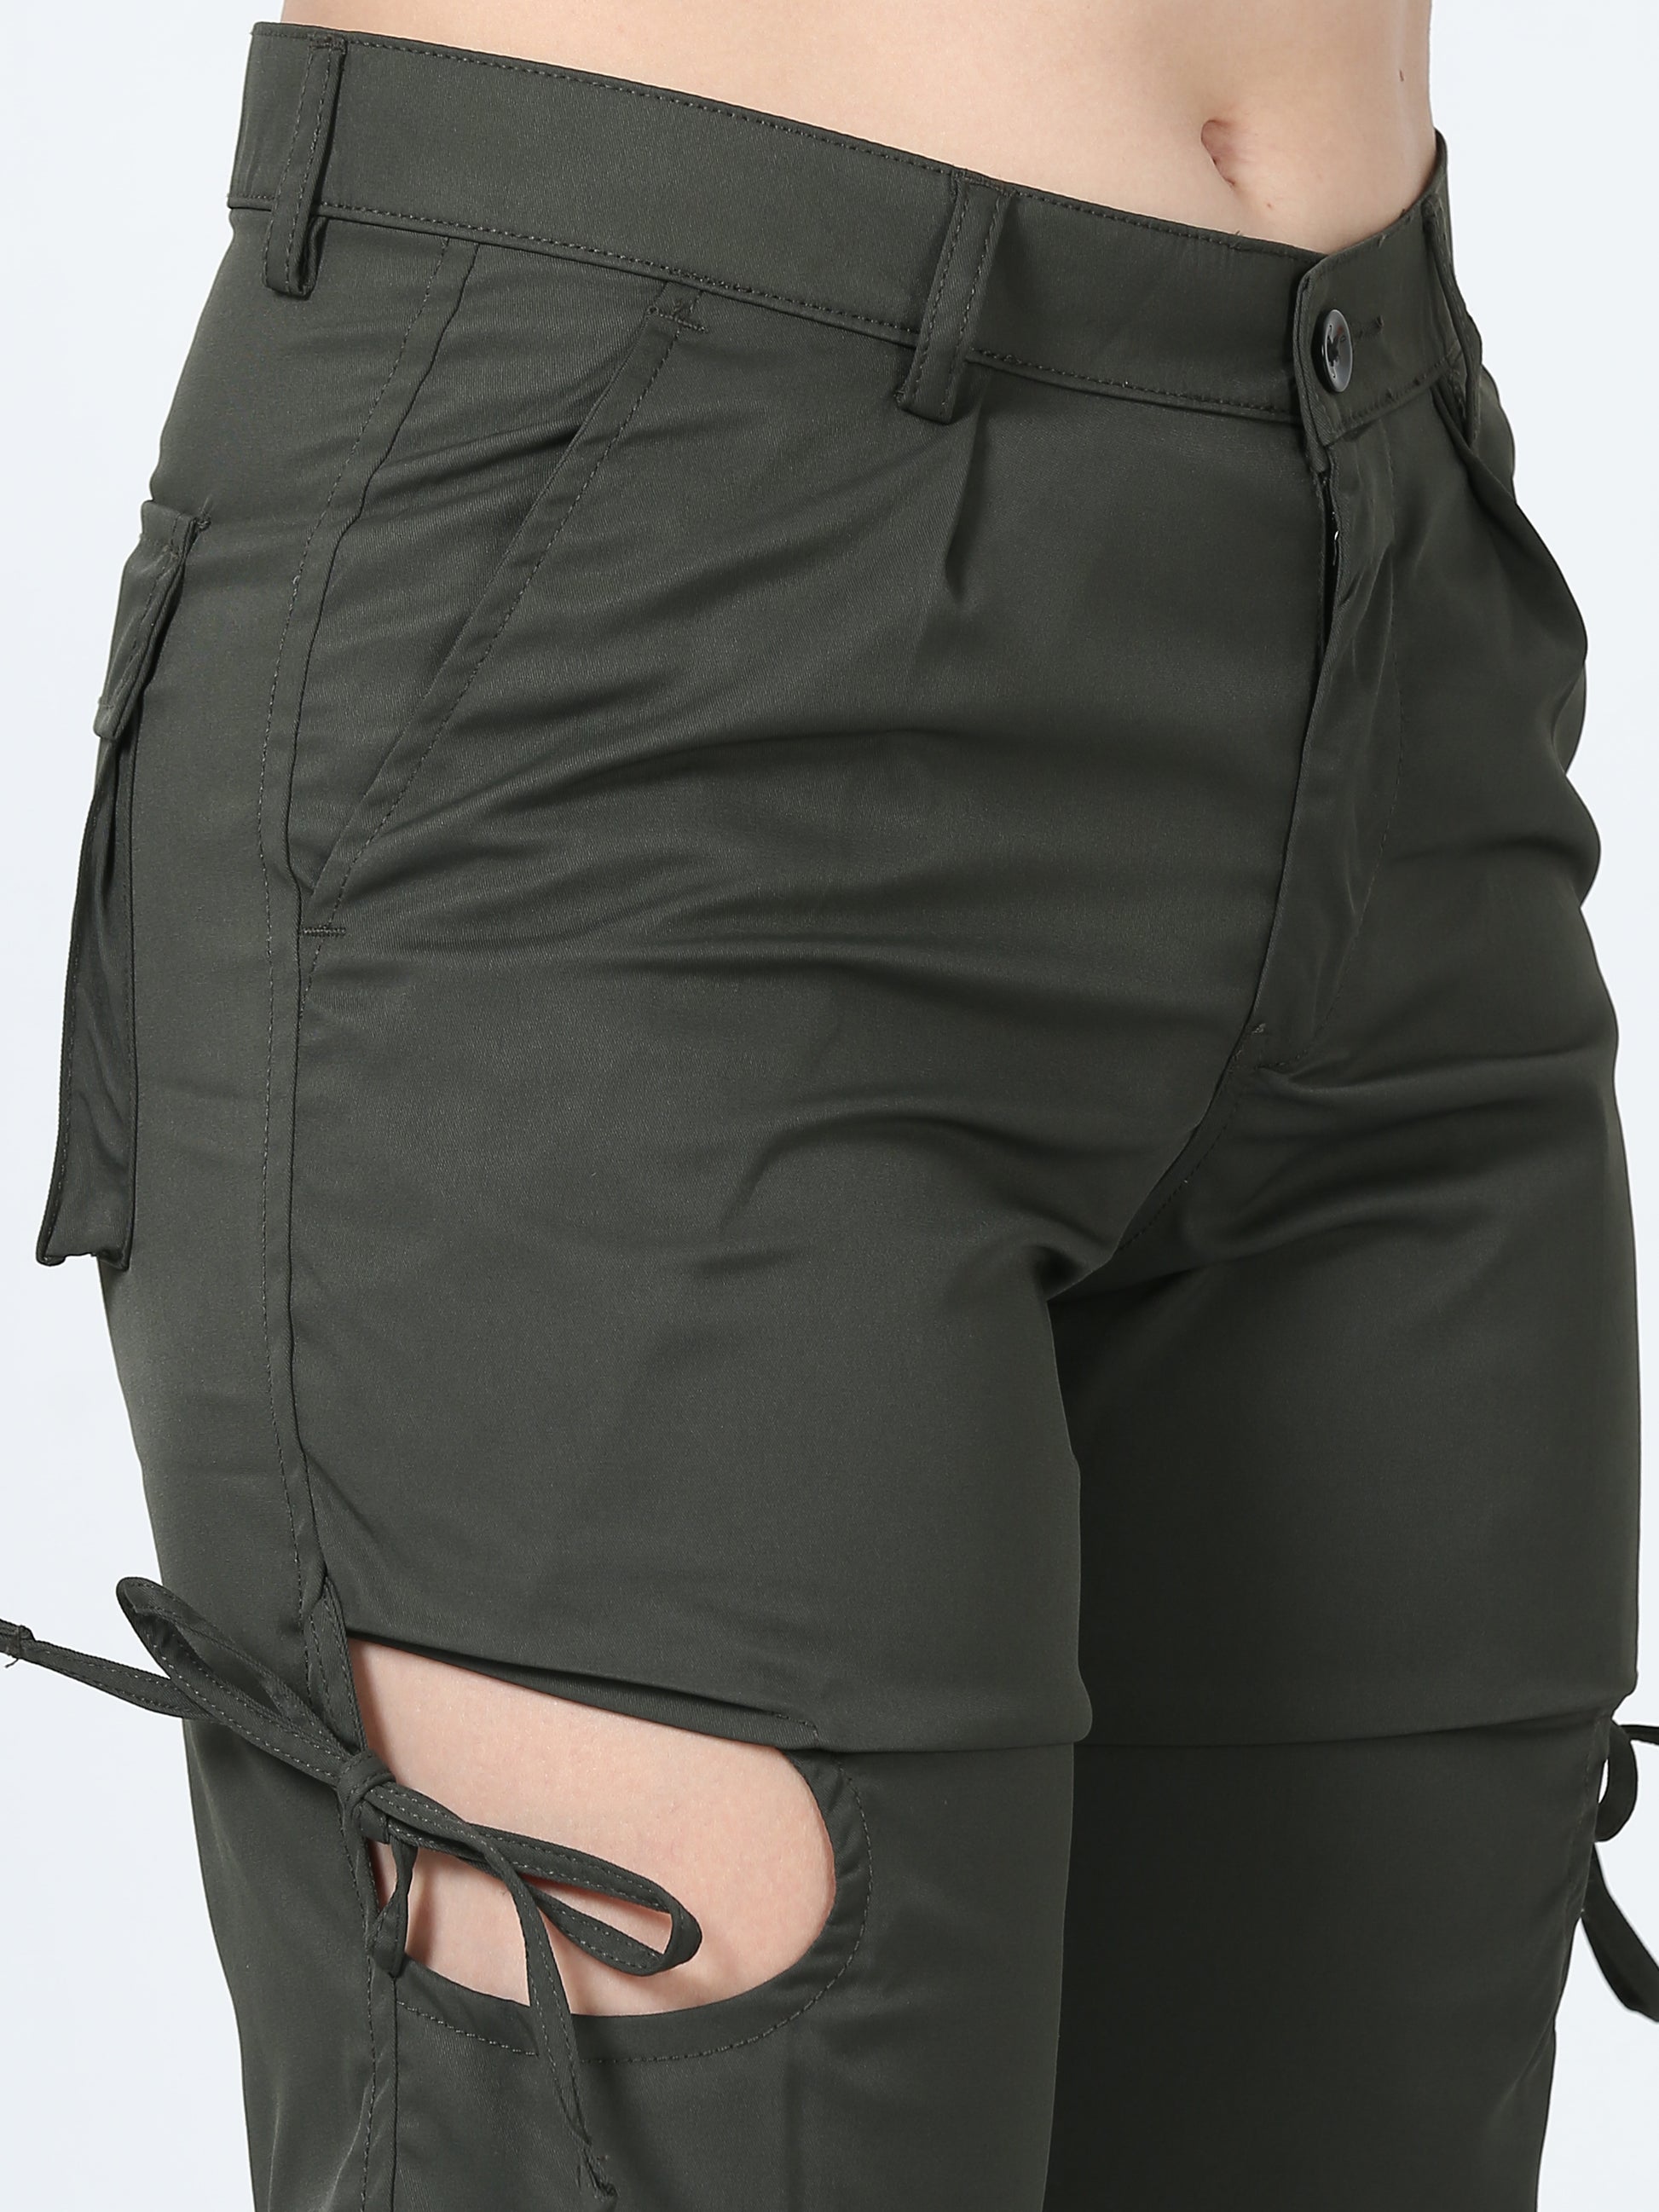 Women Dual Pocket Slashed Trousers-Olive